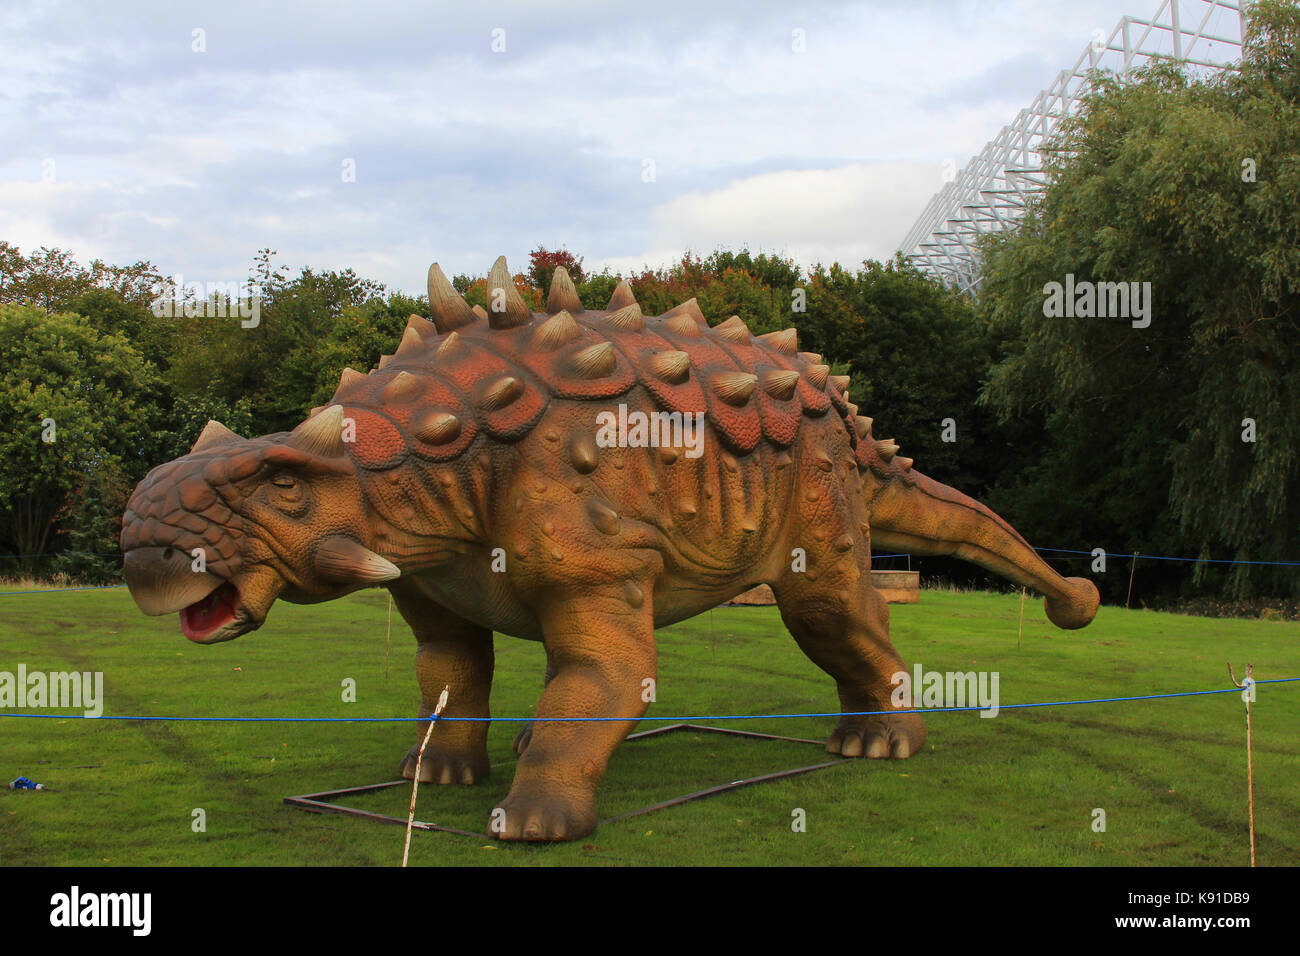 Newcastle upon Tyne, Großbritannien. 21 Sep, 2017. Dinosaurier: Jurassic Kingdom visits Leazes Park in Newcastle upon Tyne, UK Credit: David Whinham/Alamy leben Nachrichten Stockfoto